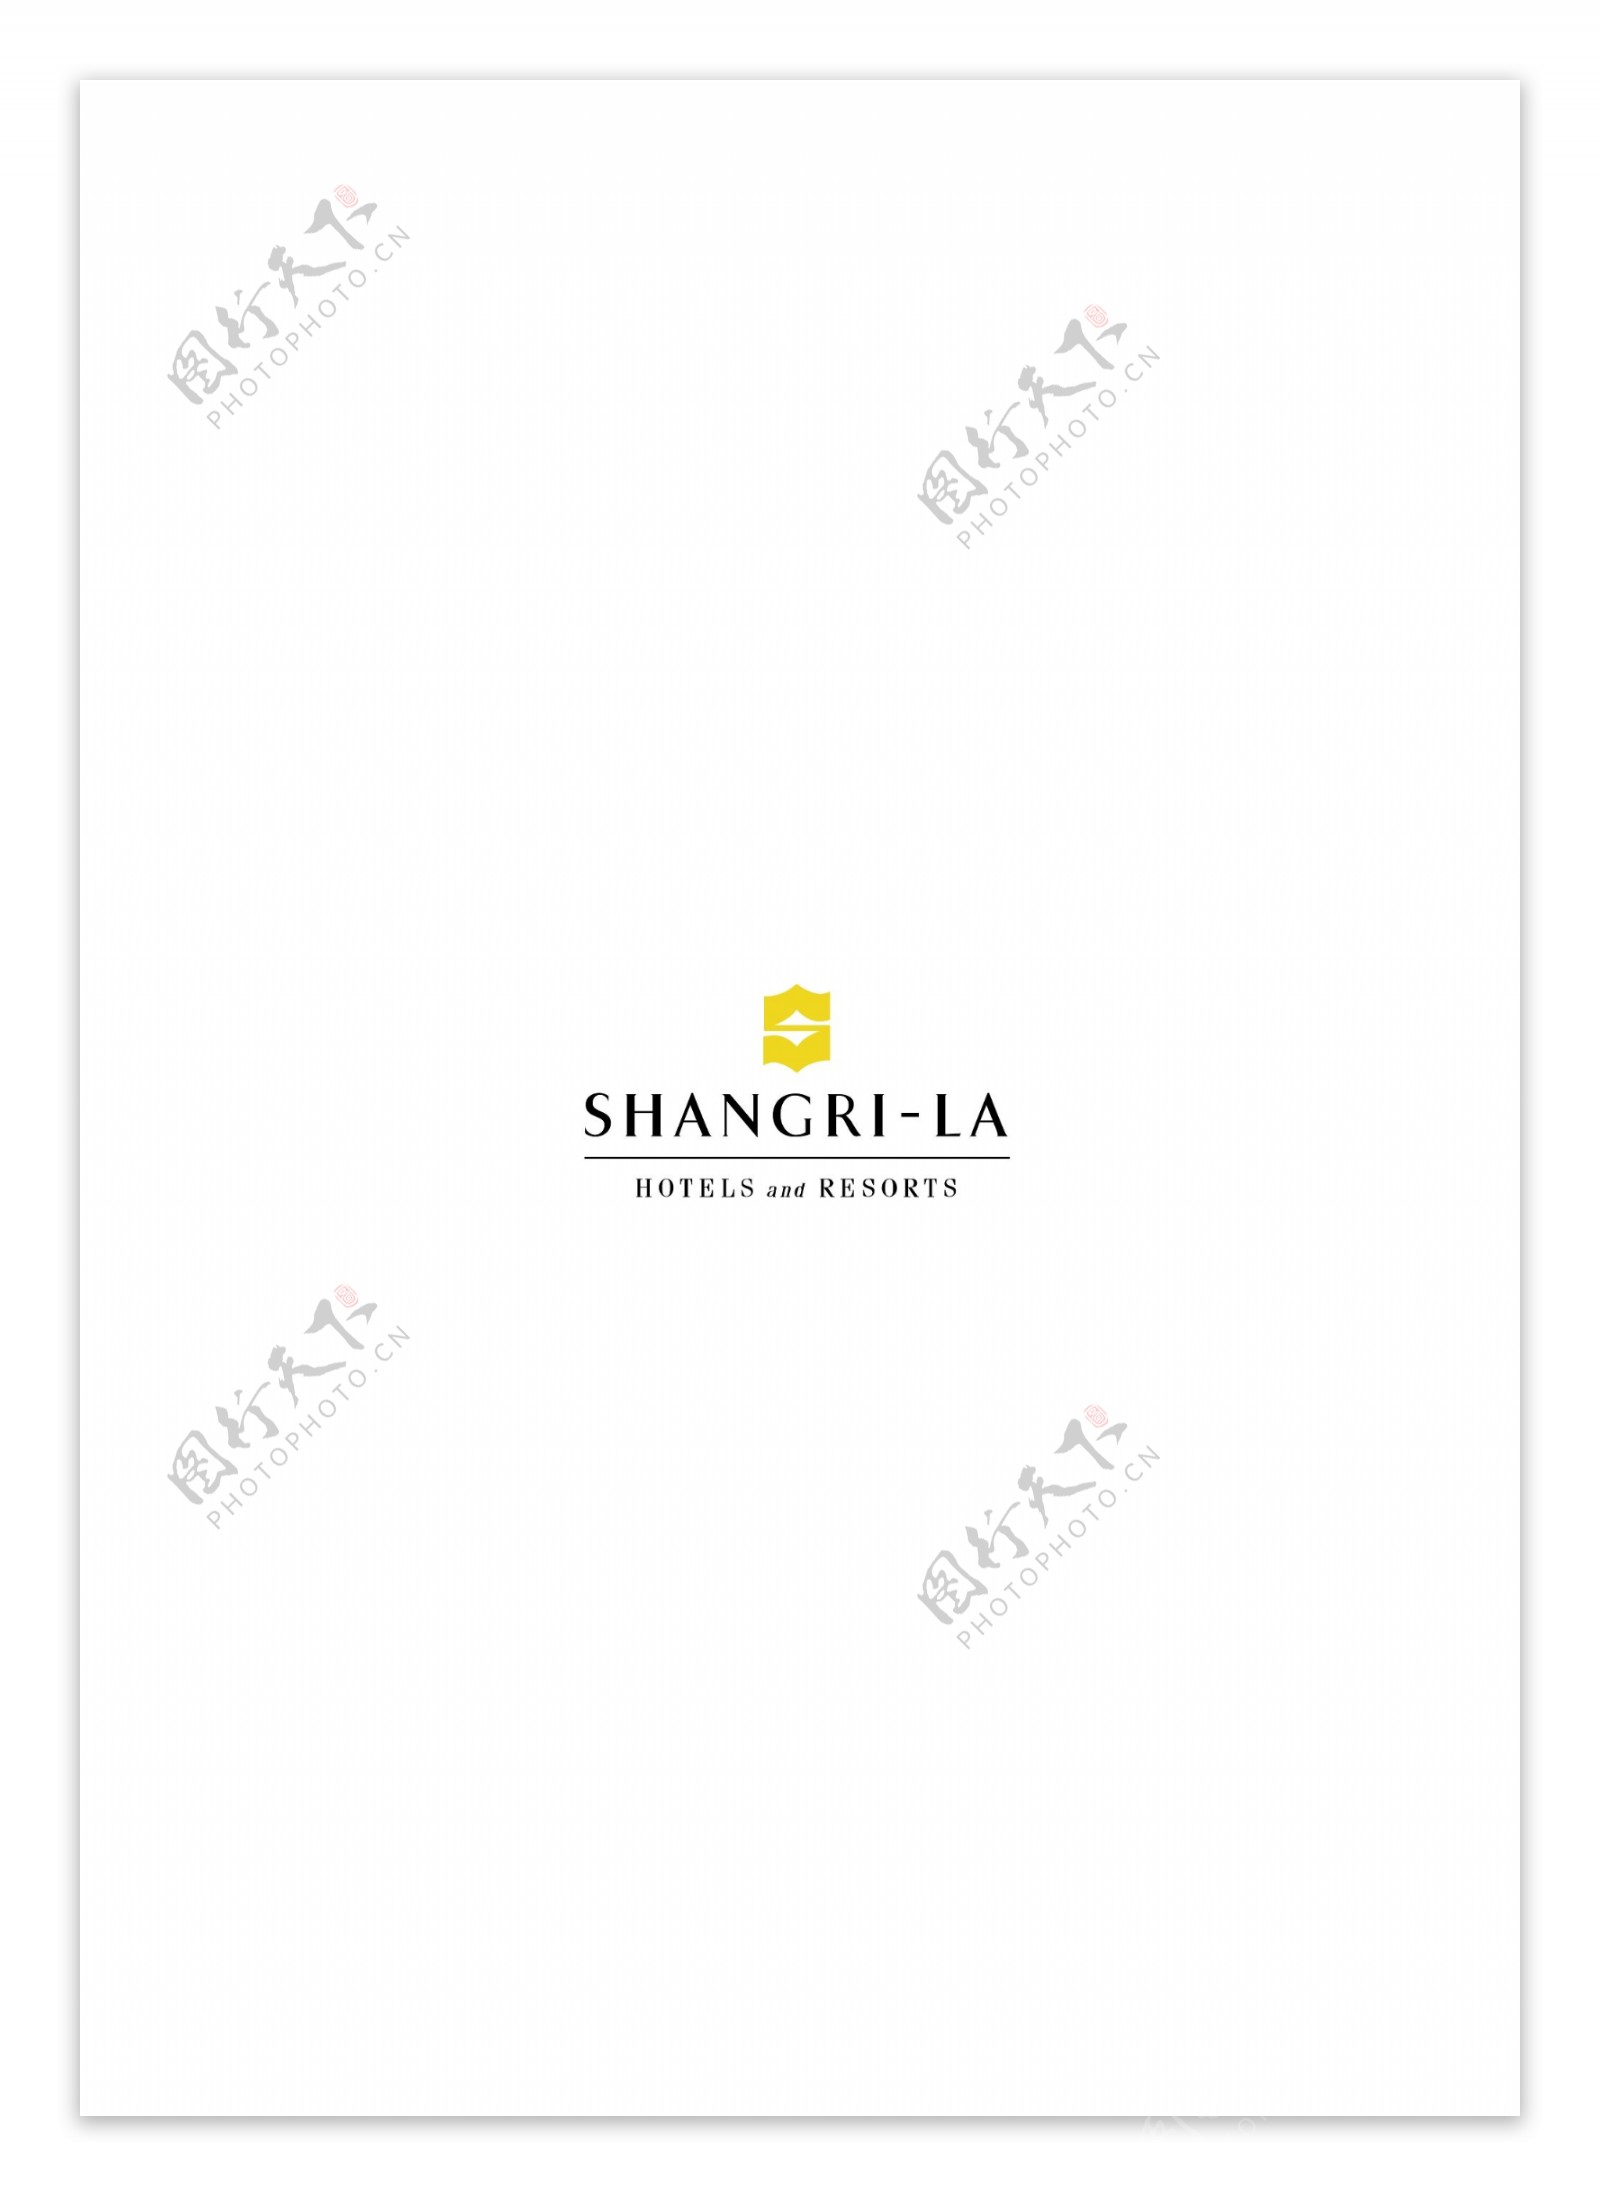 ShangriLalogo设计欣赏ShangriLa大饭店标志下载标志设计欣赏